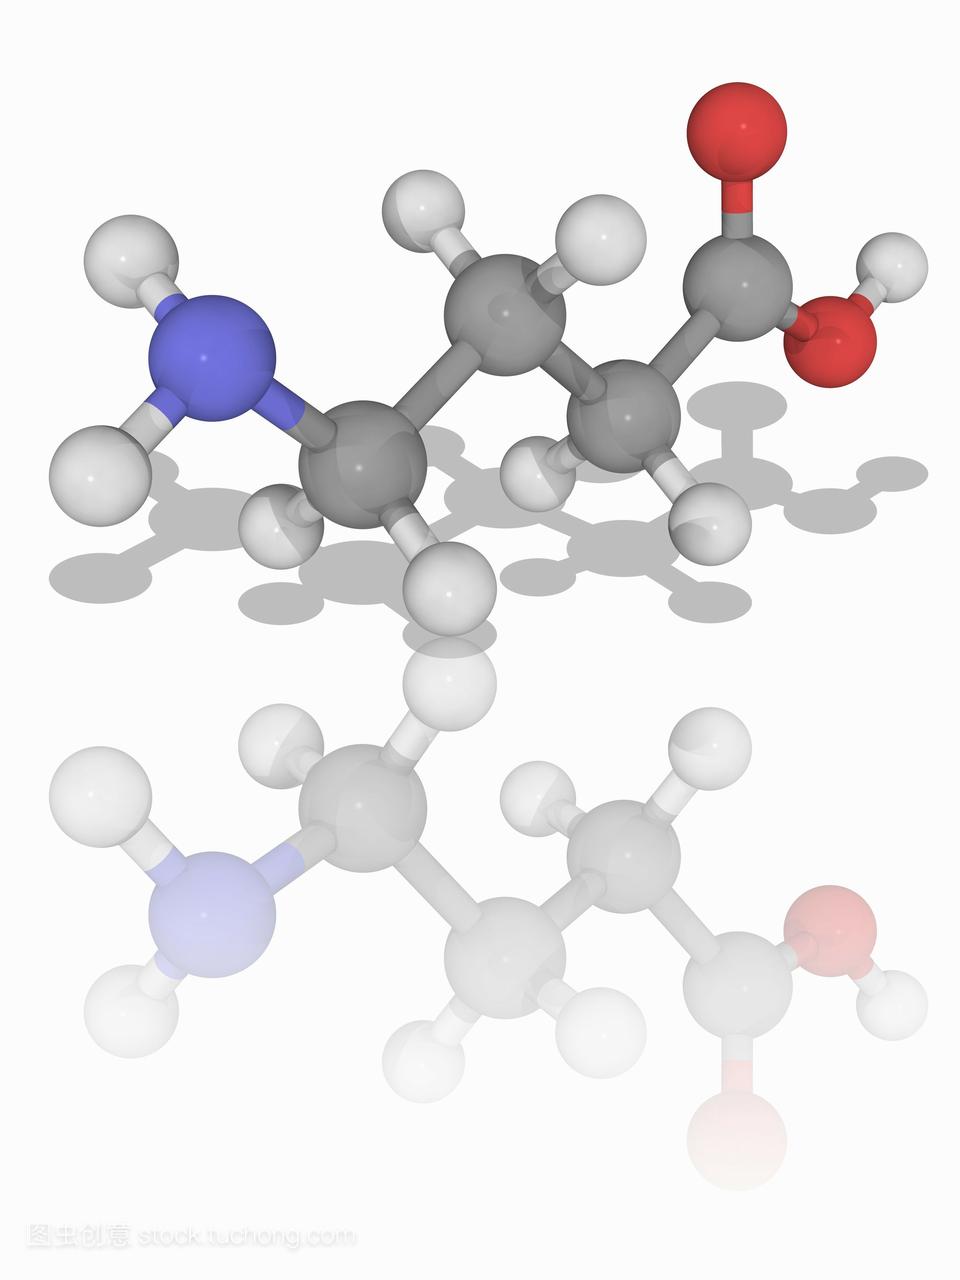 γ-氨基丁酸。分子模式的神经递质γ-氨基丁酸